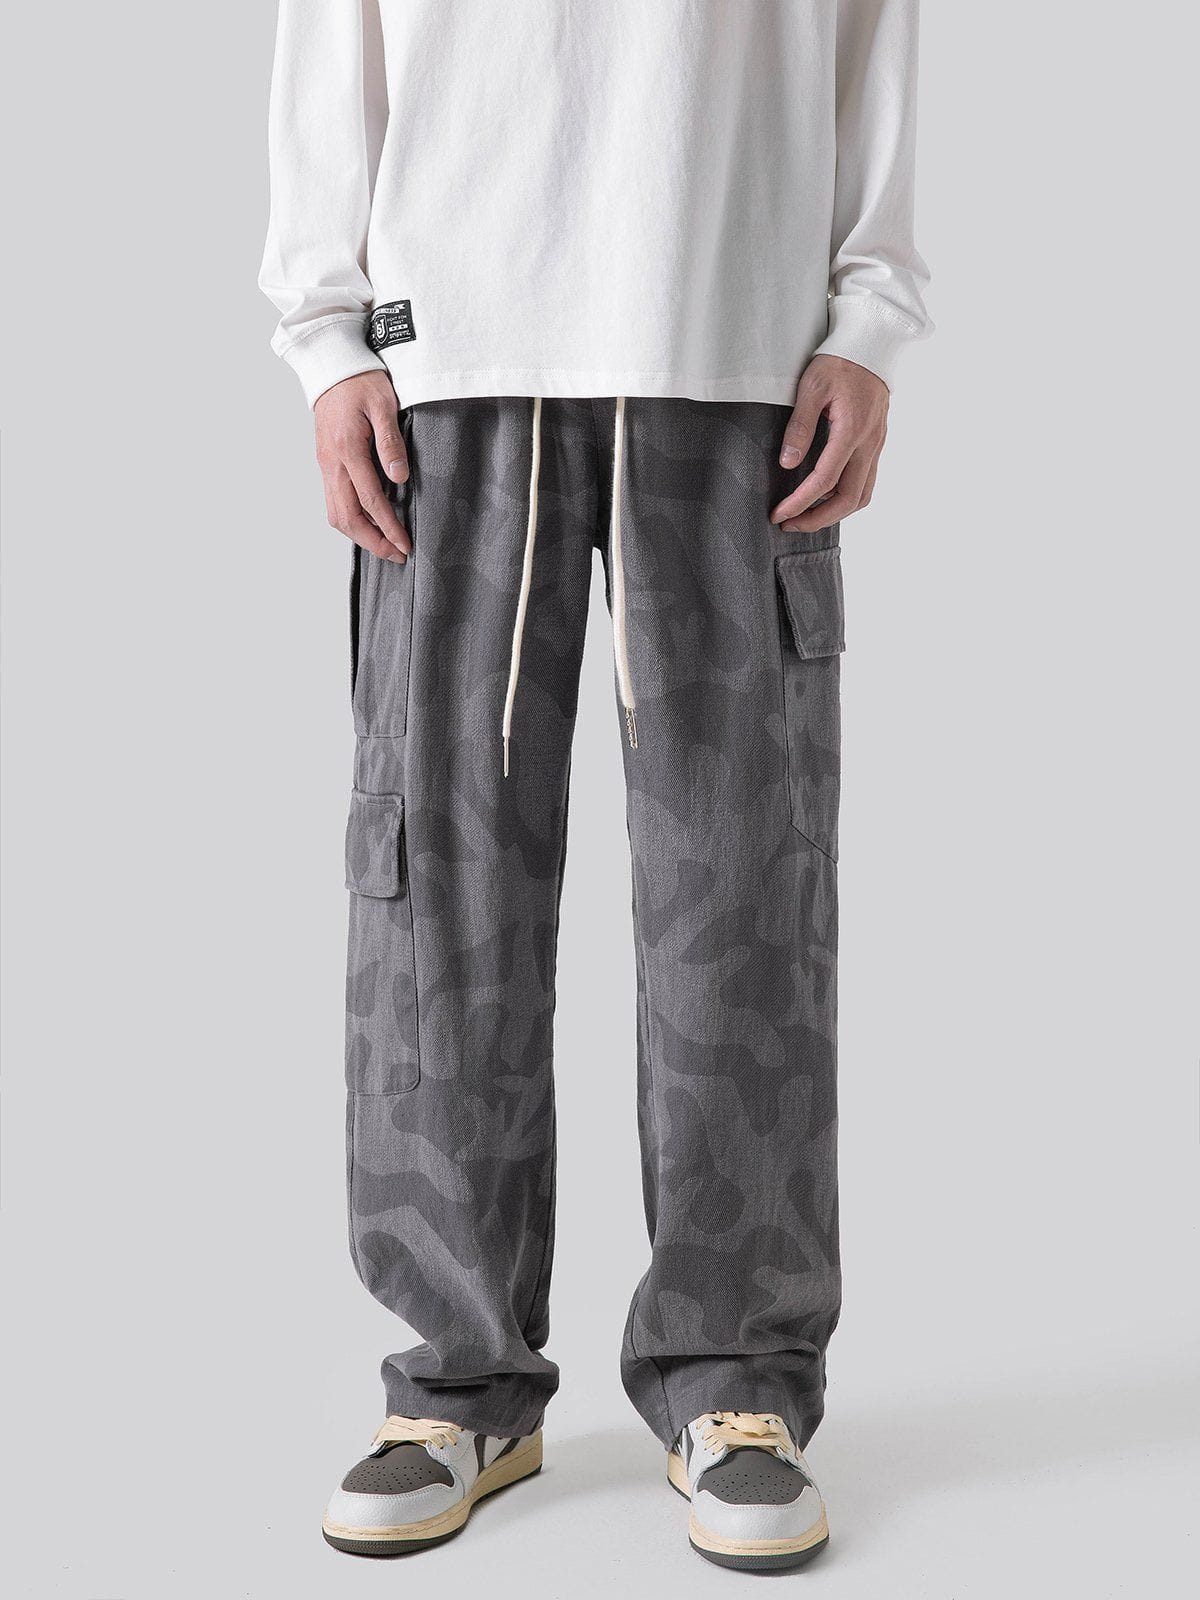 Sneakerland® - Large Multi-Pocket Cargo Pants